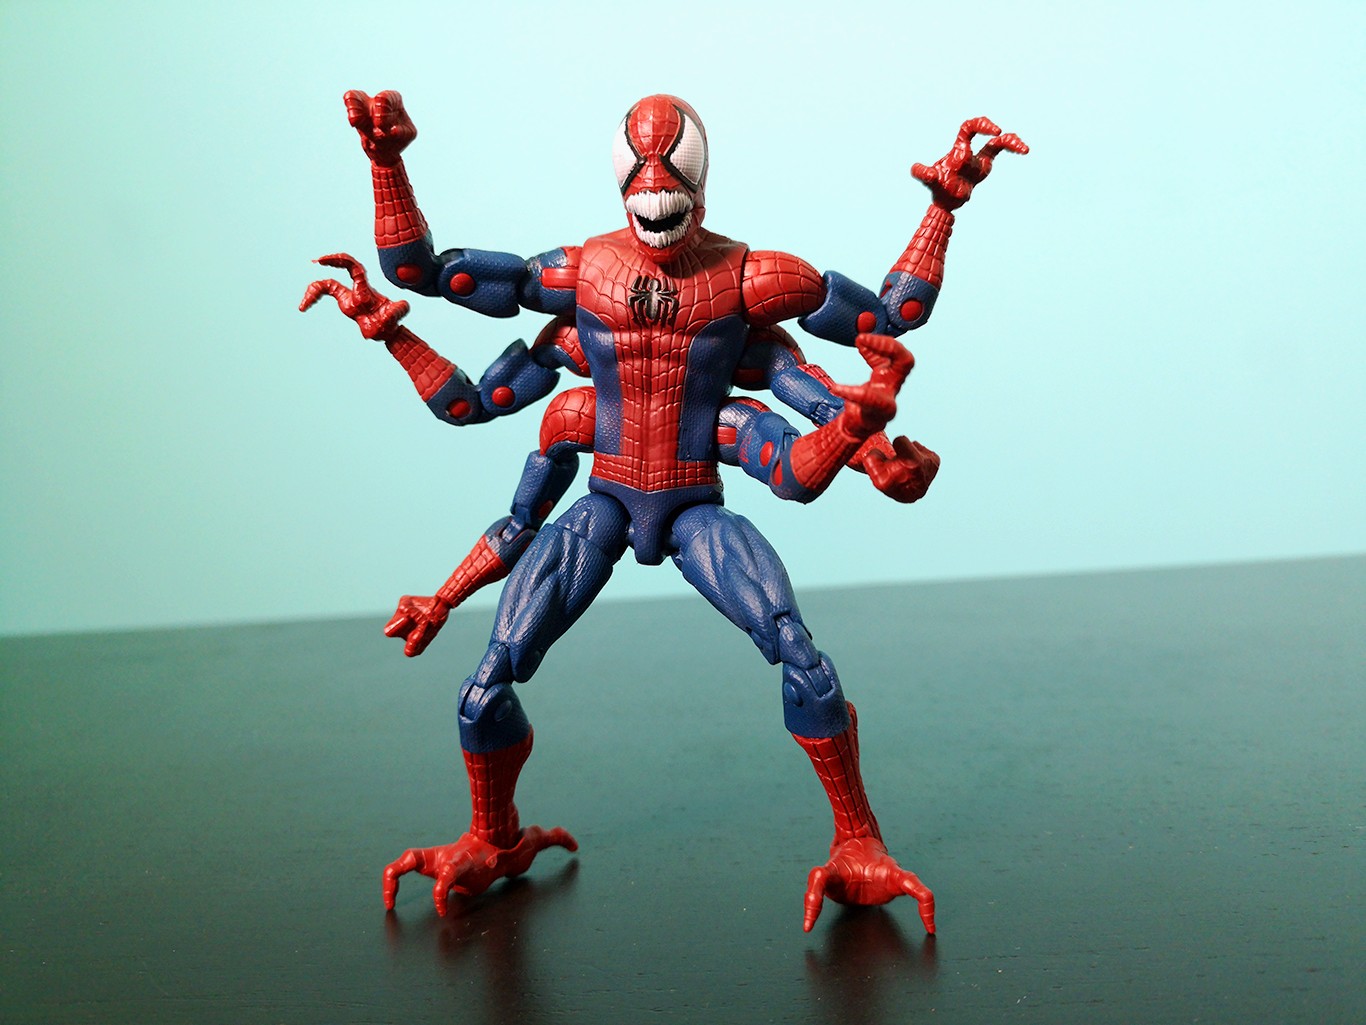 spiderman arm toy